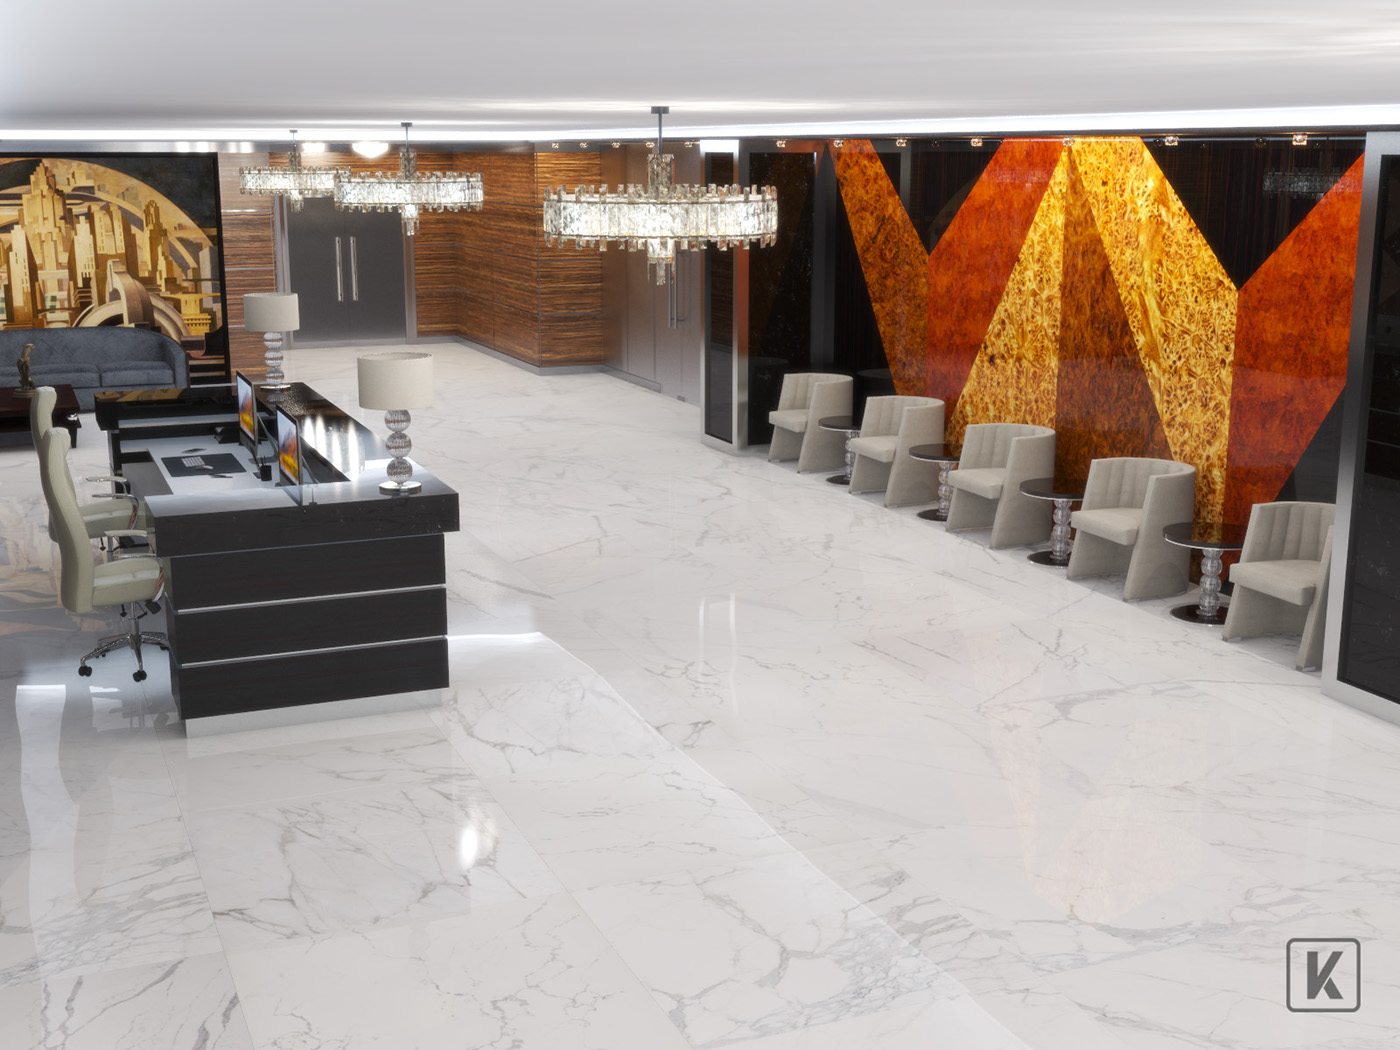 Office Interior art deco architecture design reception idea bulding luxury Russia